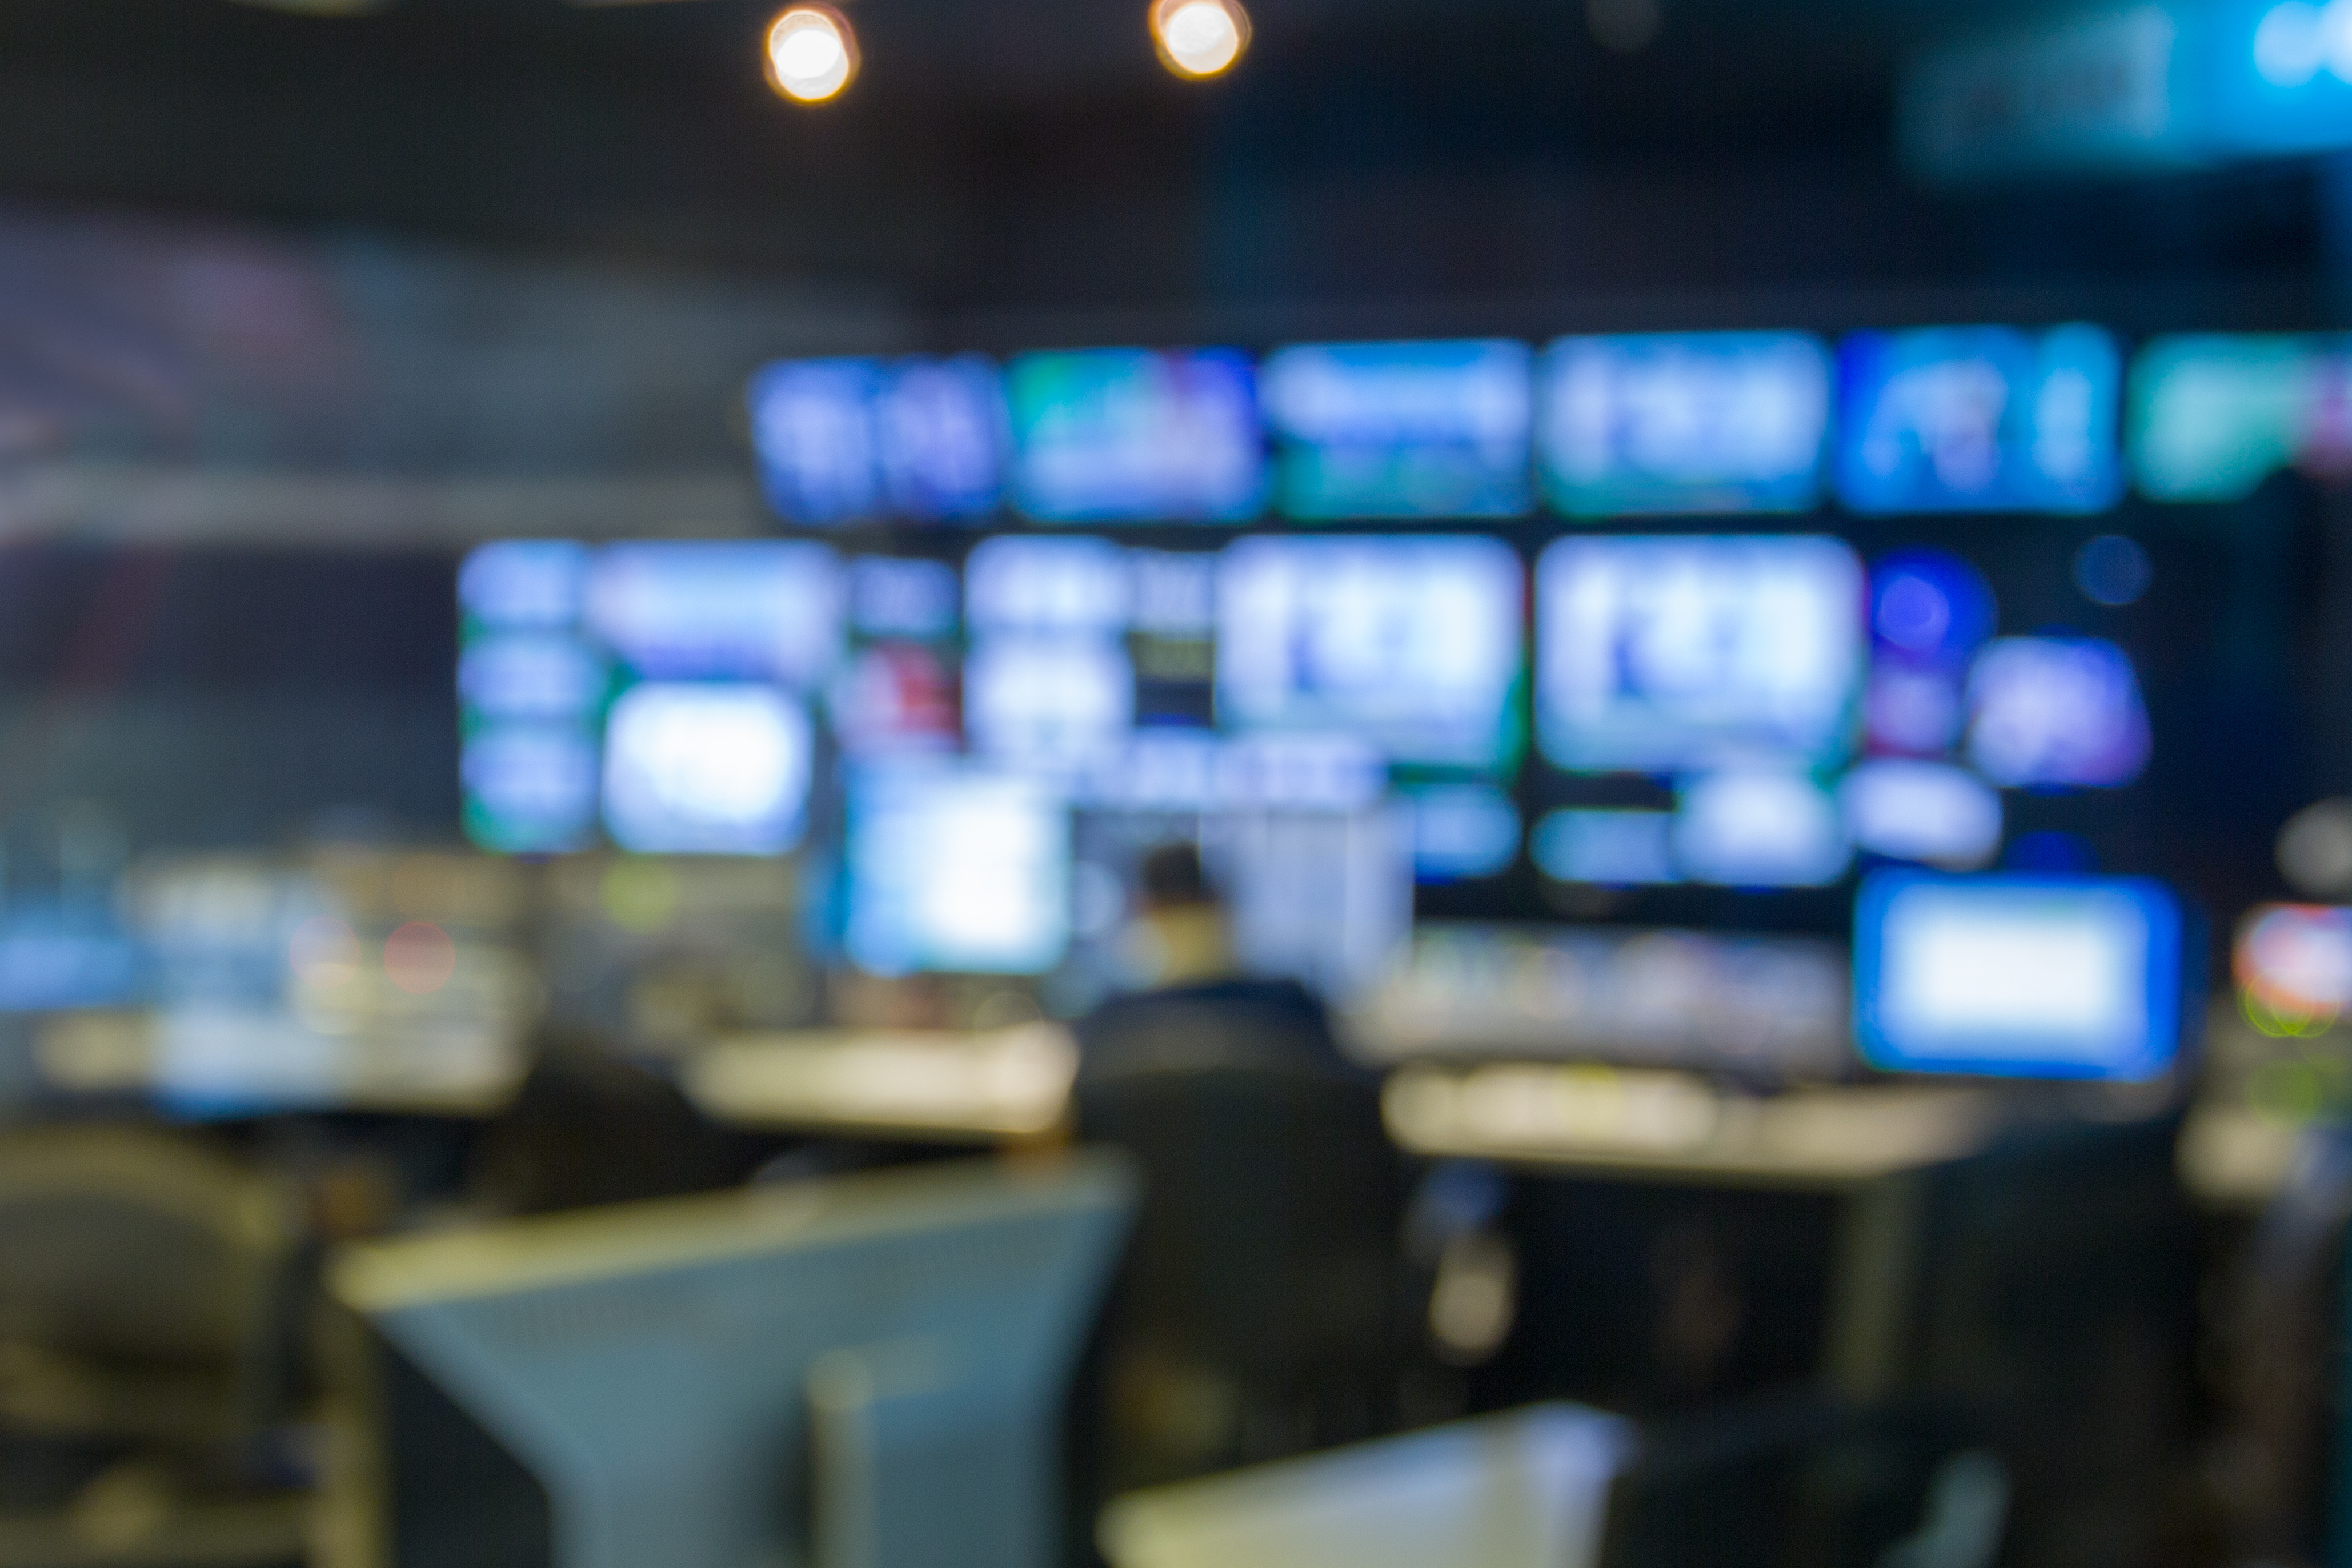 A blurred image of a broadcast newsroom